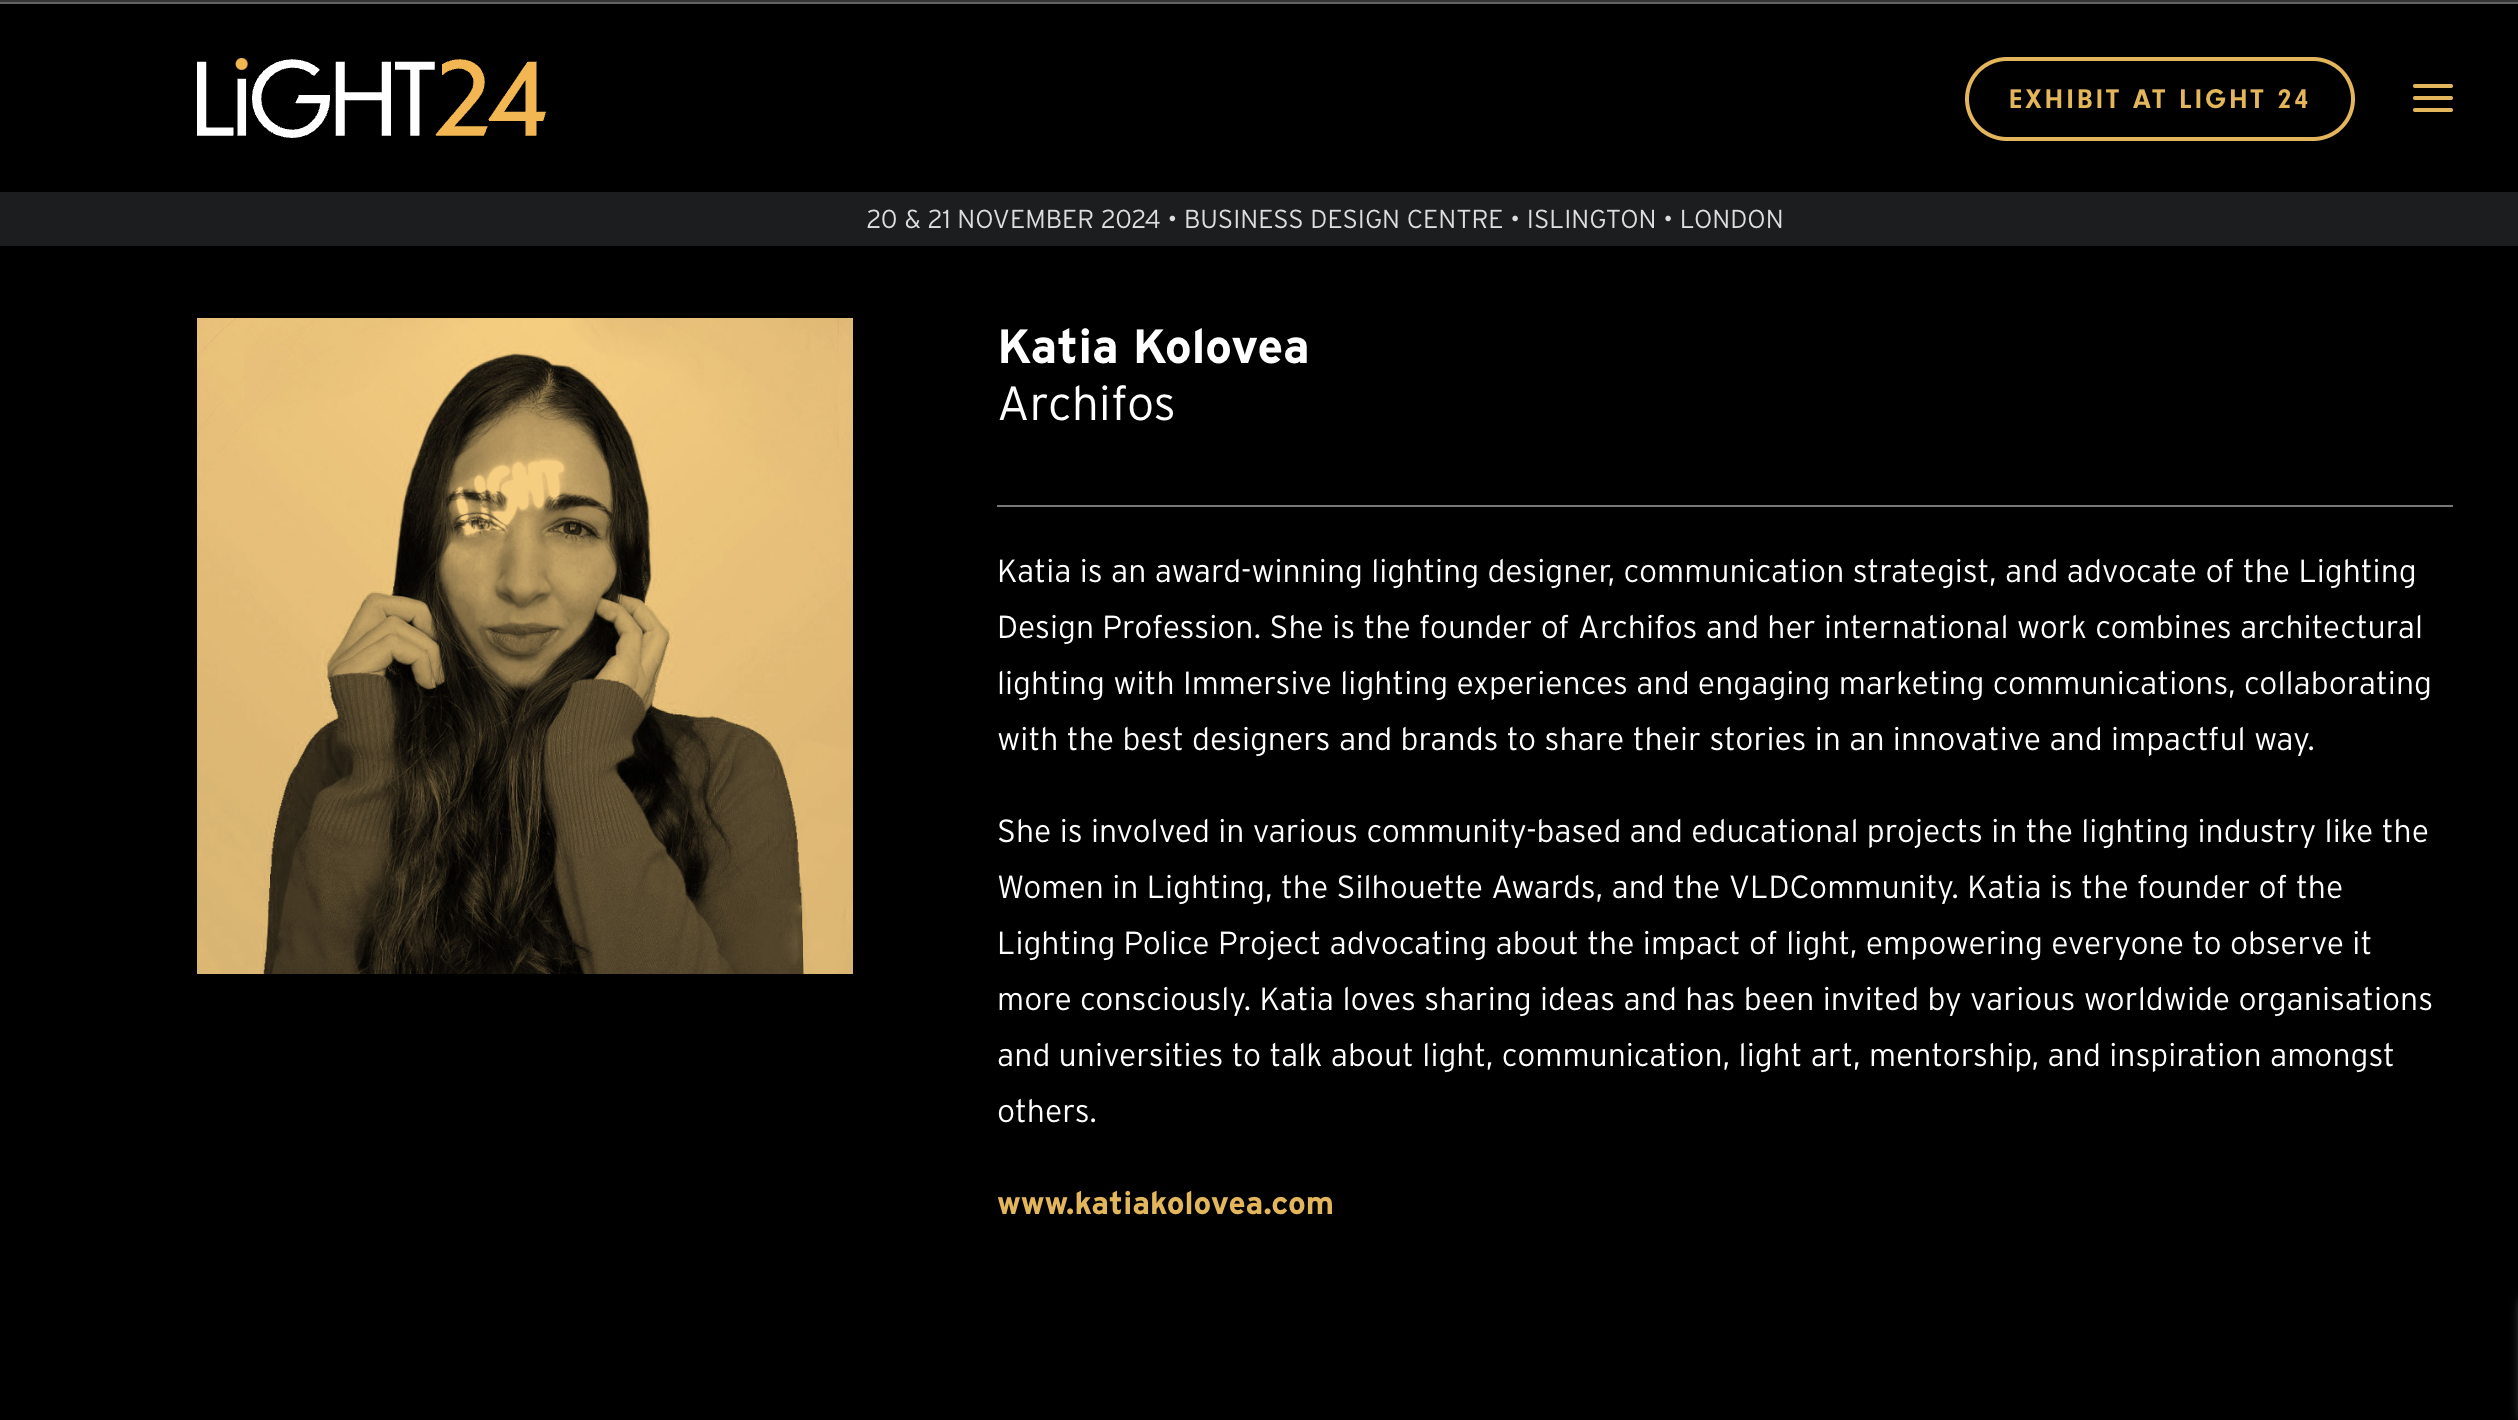 Katia Kolovea @Light23 representing The Lighting Police